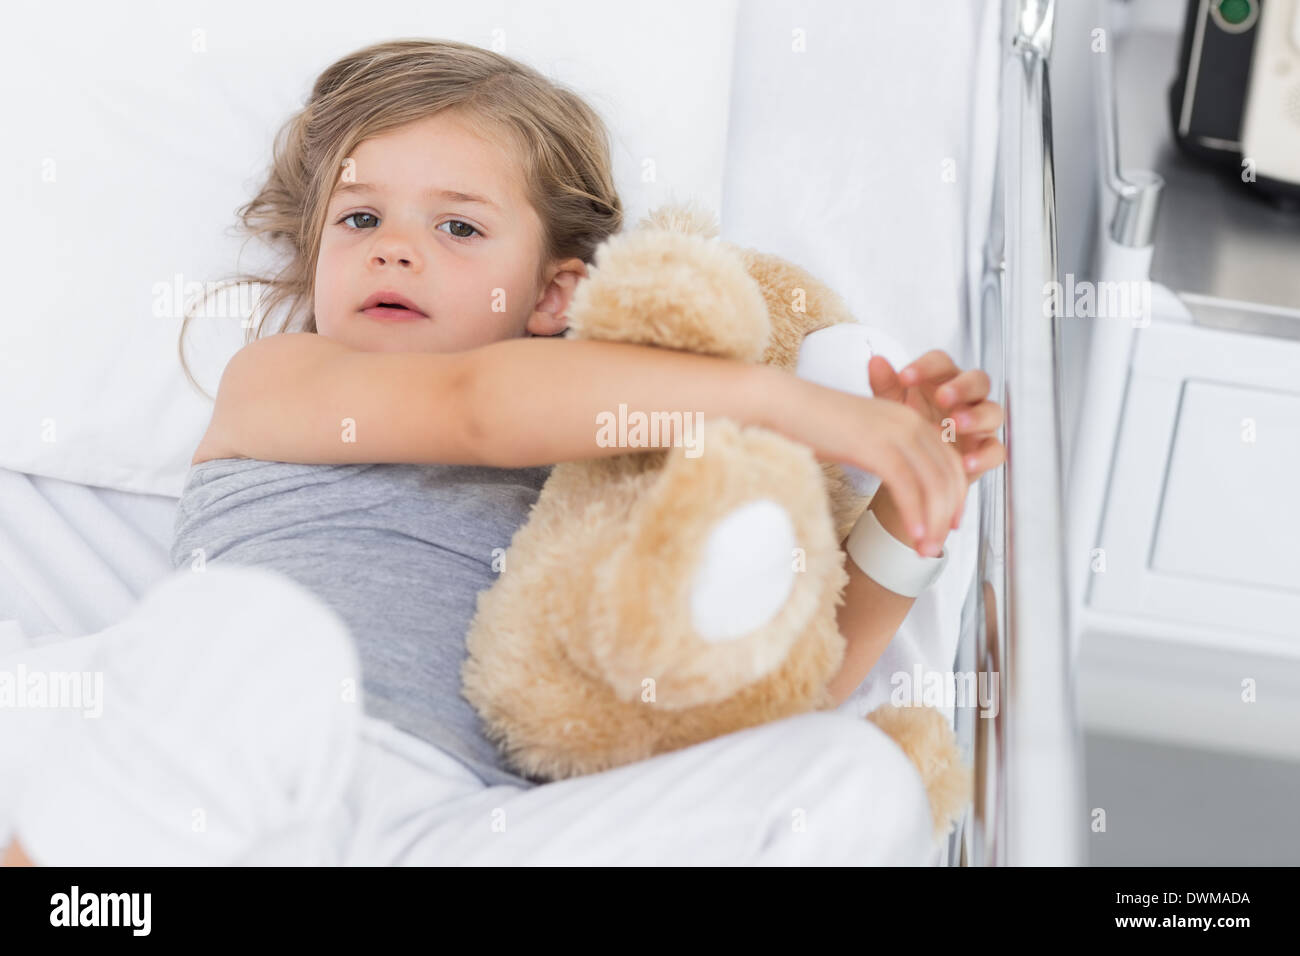 Cute girl hugging teddy bear in hospital bed Stock Photo